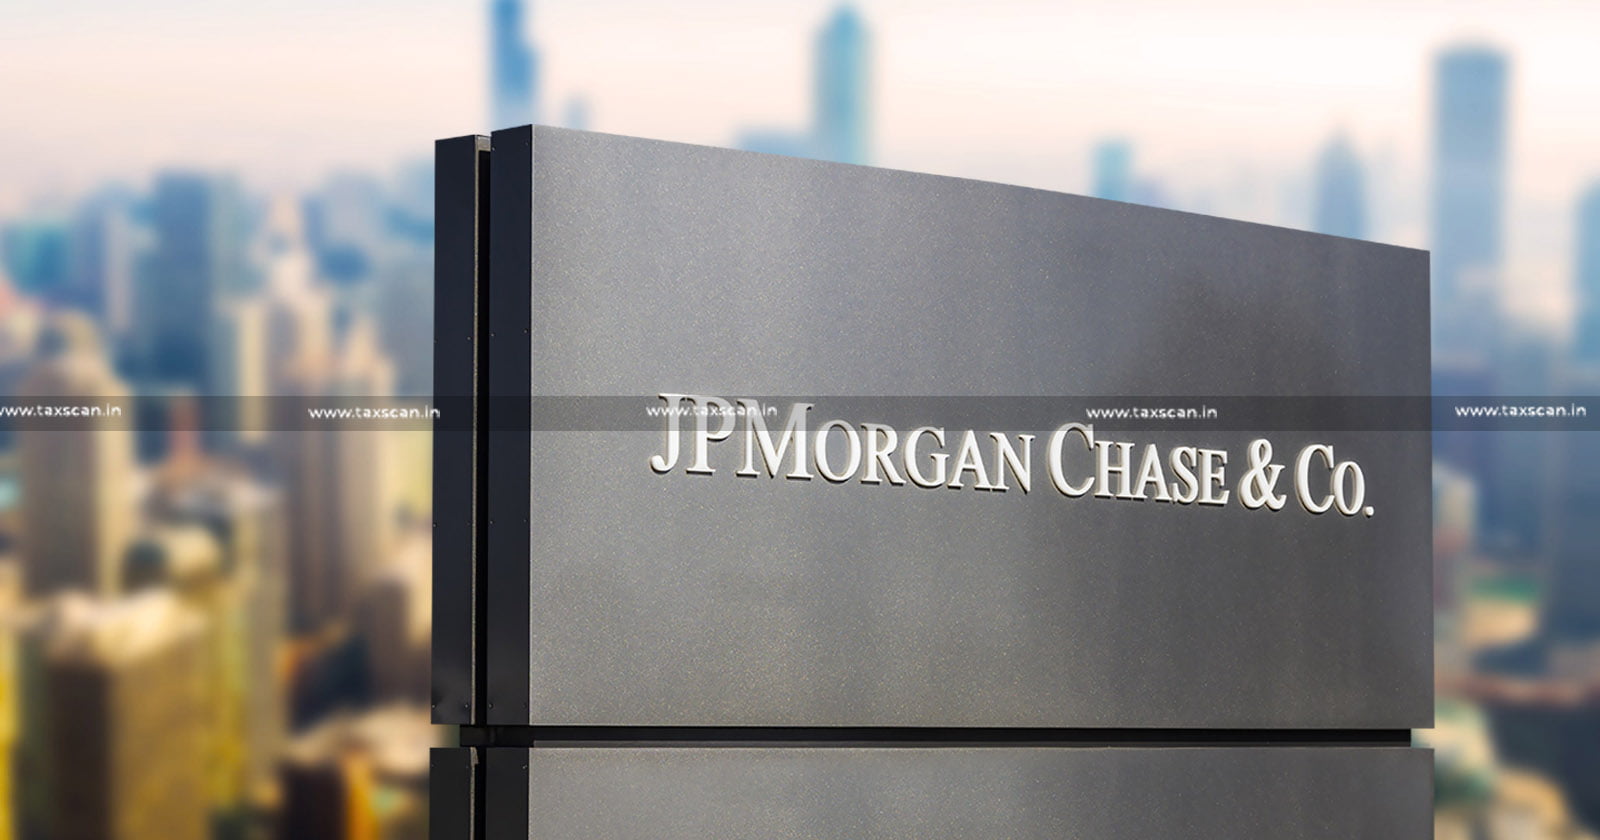 CMA Vacancy in JPMorgan Chase & Co - Jobscan - MBA Vacancy in JPMorgan Chase & Co - taxscan